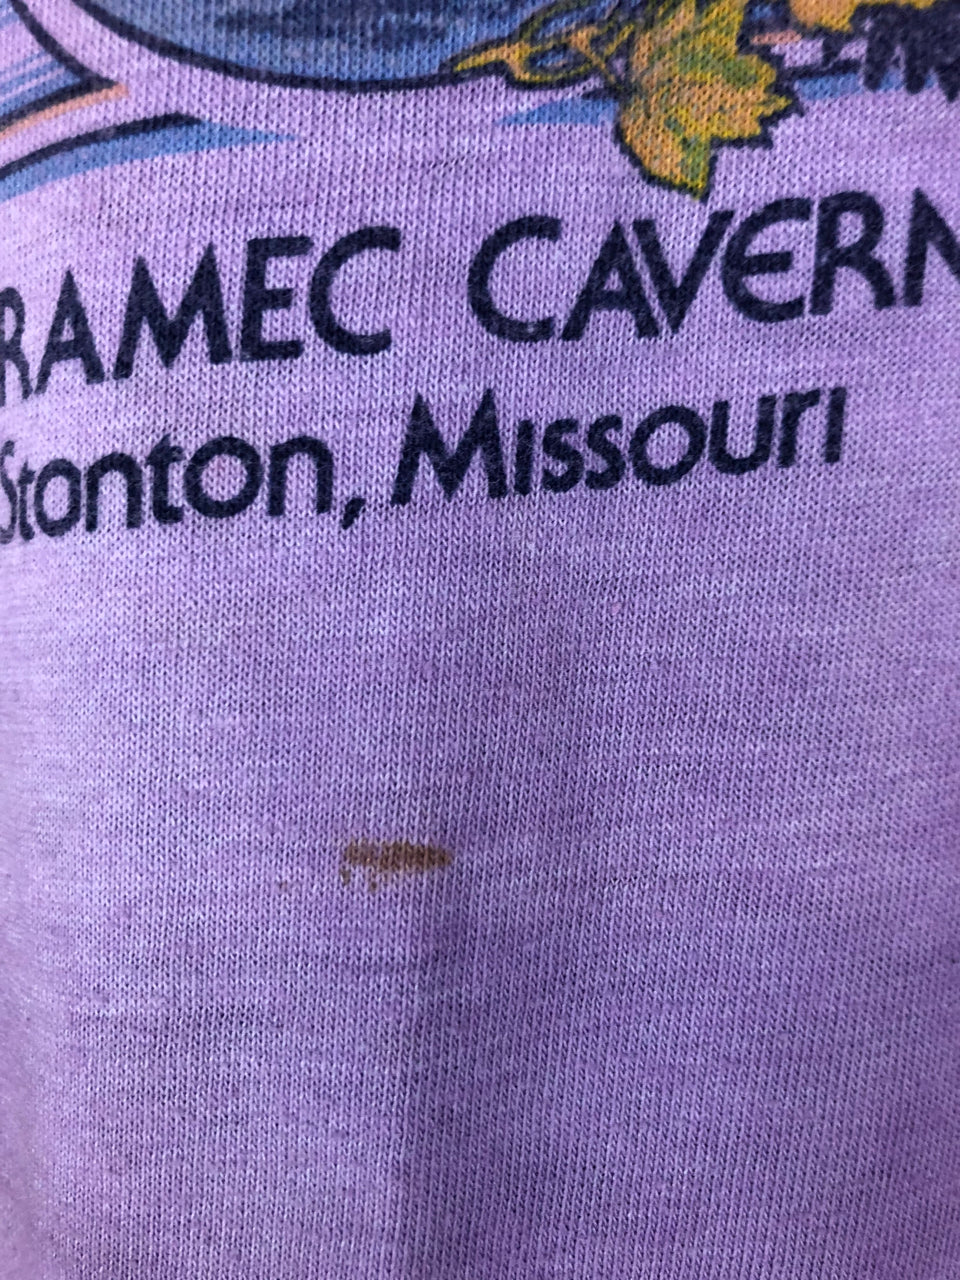 Meramec Caverns Missouri T-Shirt